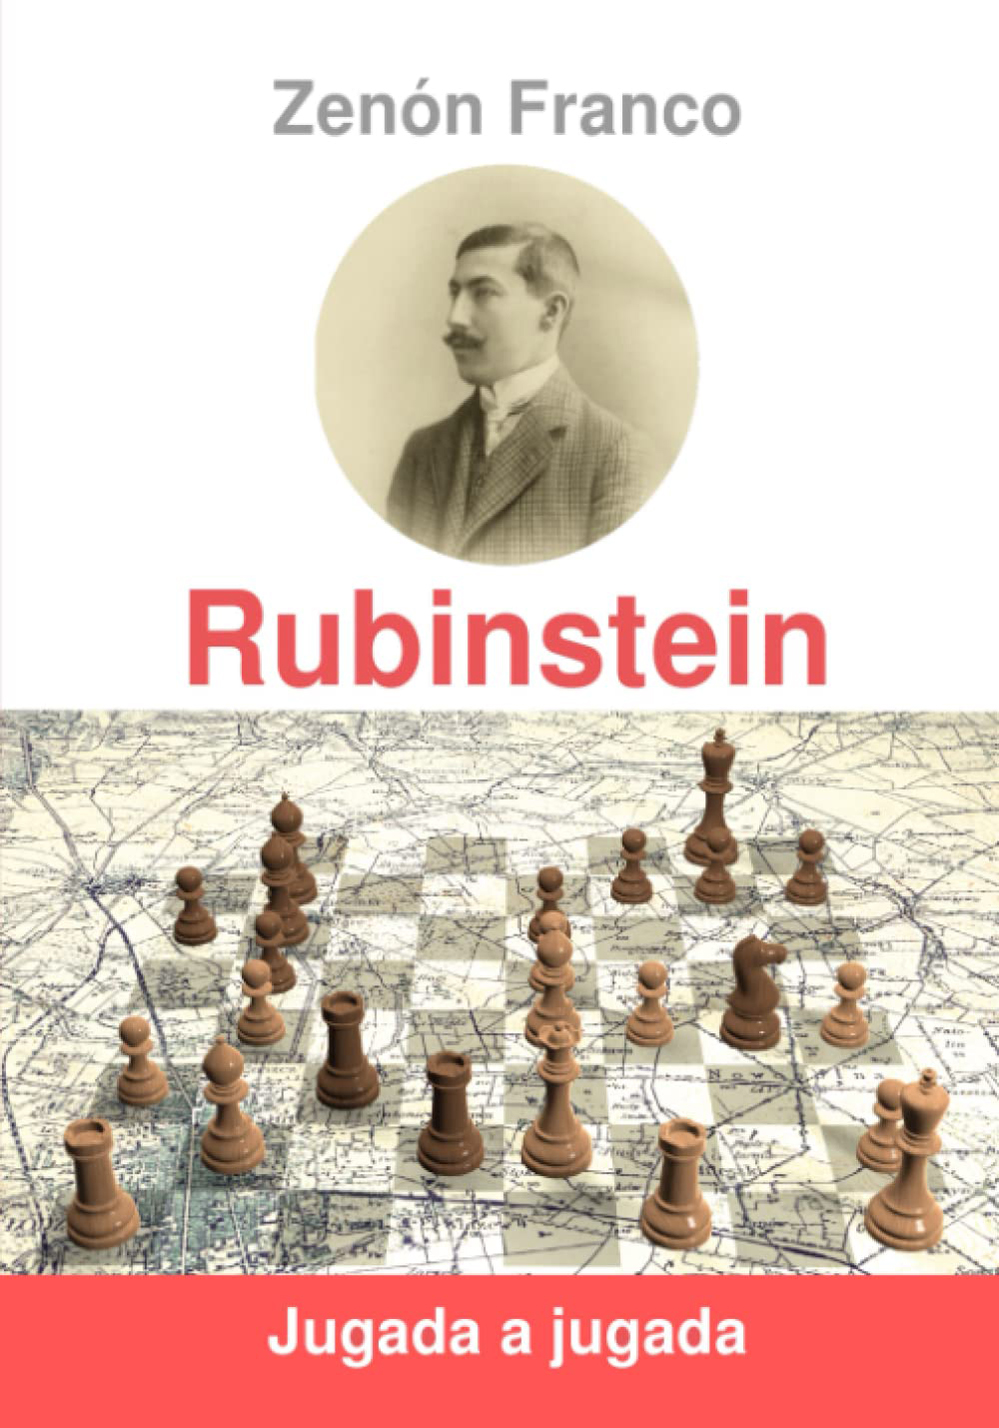 Rubinstein jugada a jugada (Tapa dura). 9798849584614